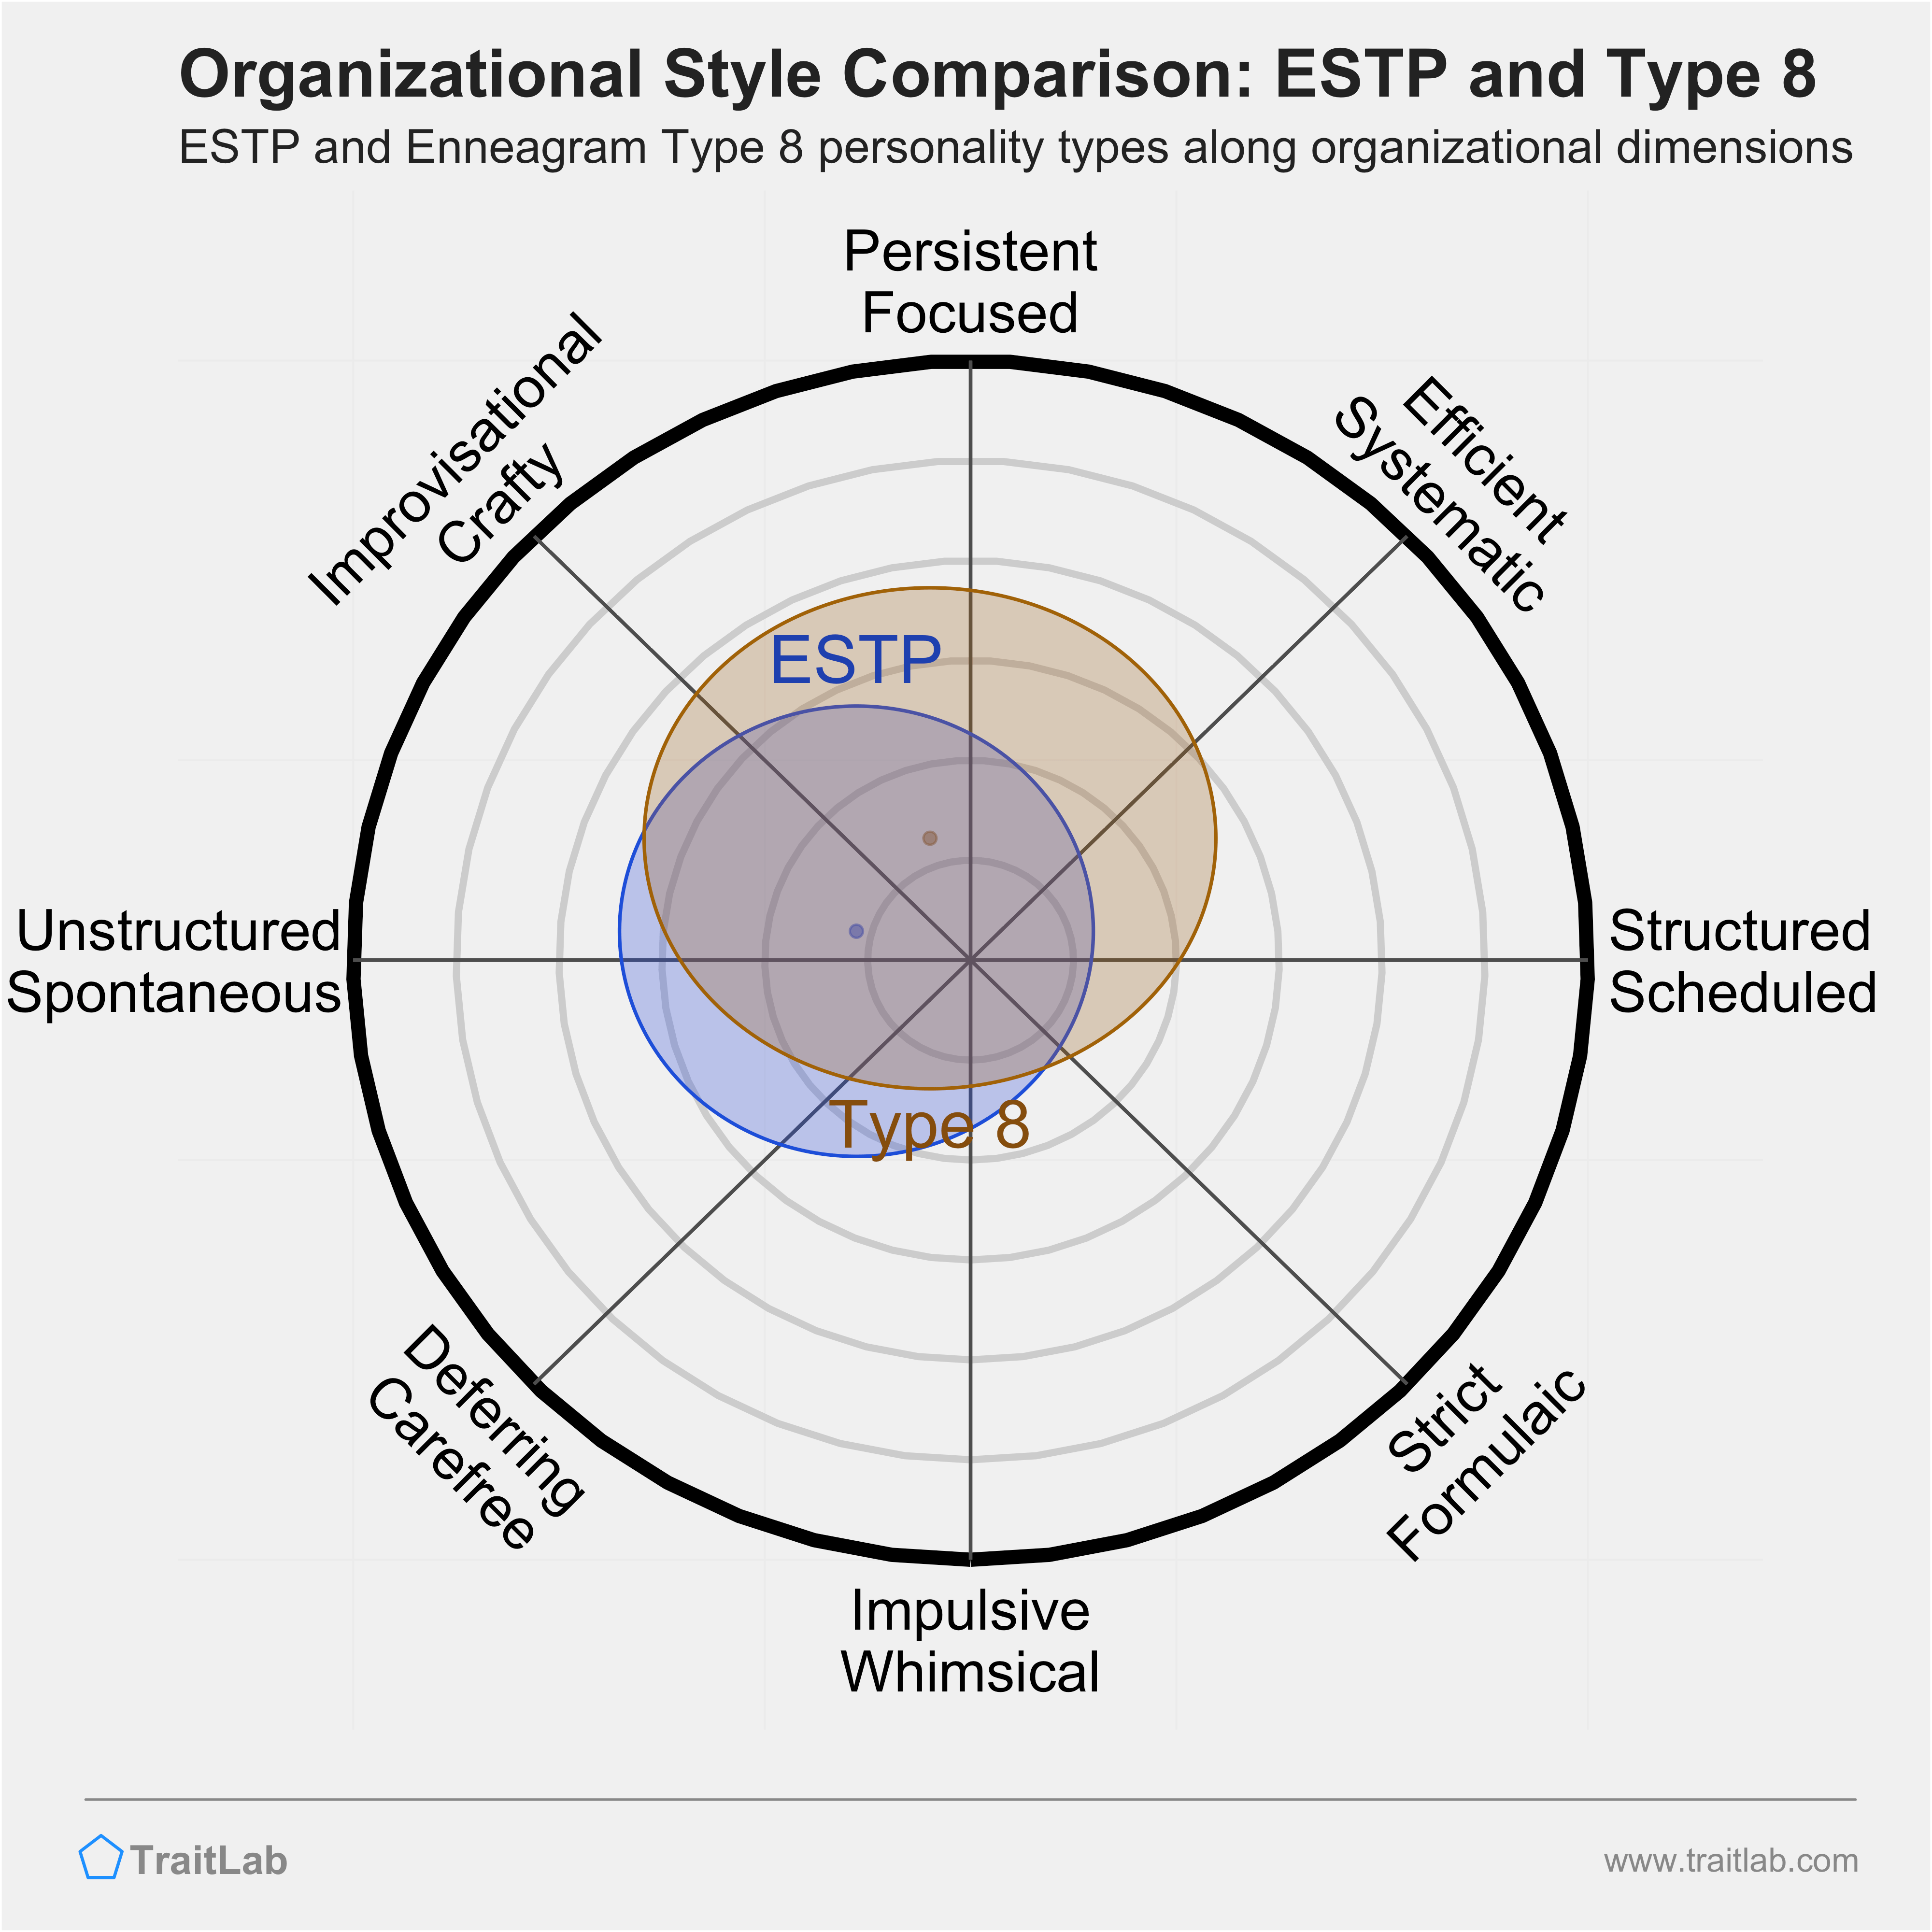 ESTP and Type 8 comparison across organizational dimensions